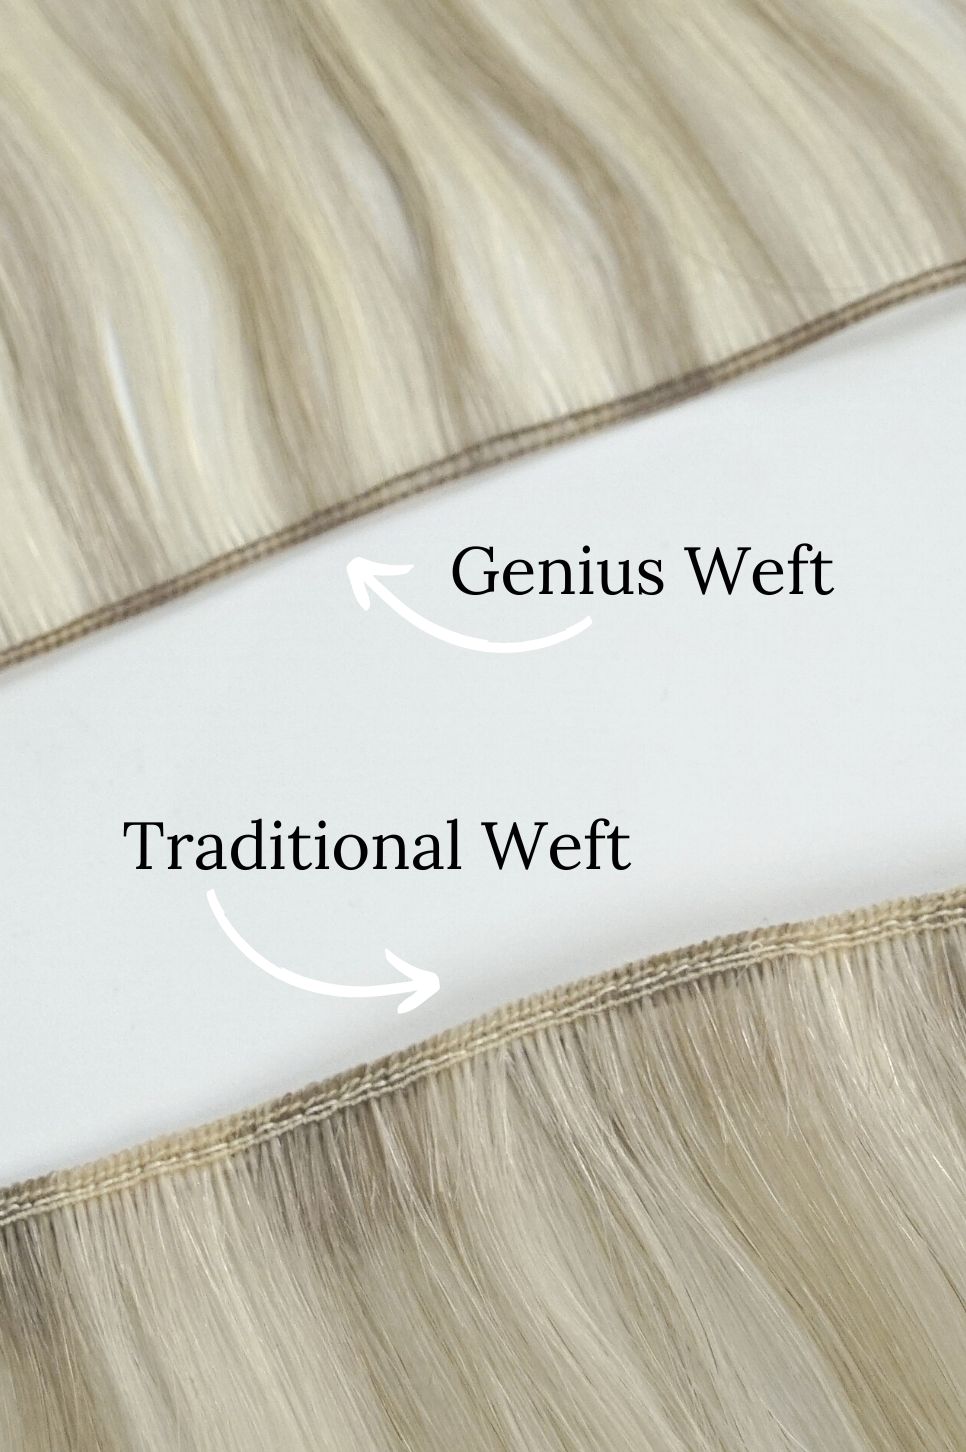 #60 Whitest Ash Blonde Genius Hair Weft Extensions